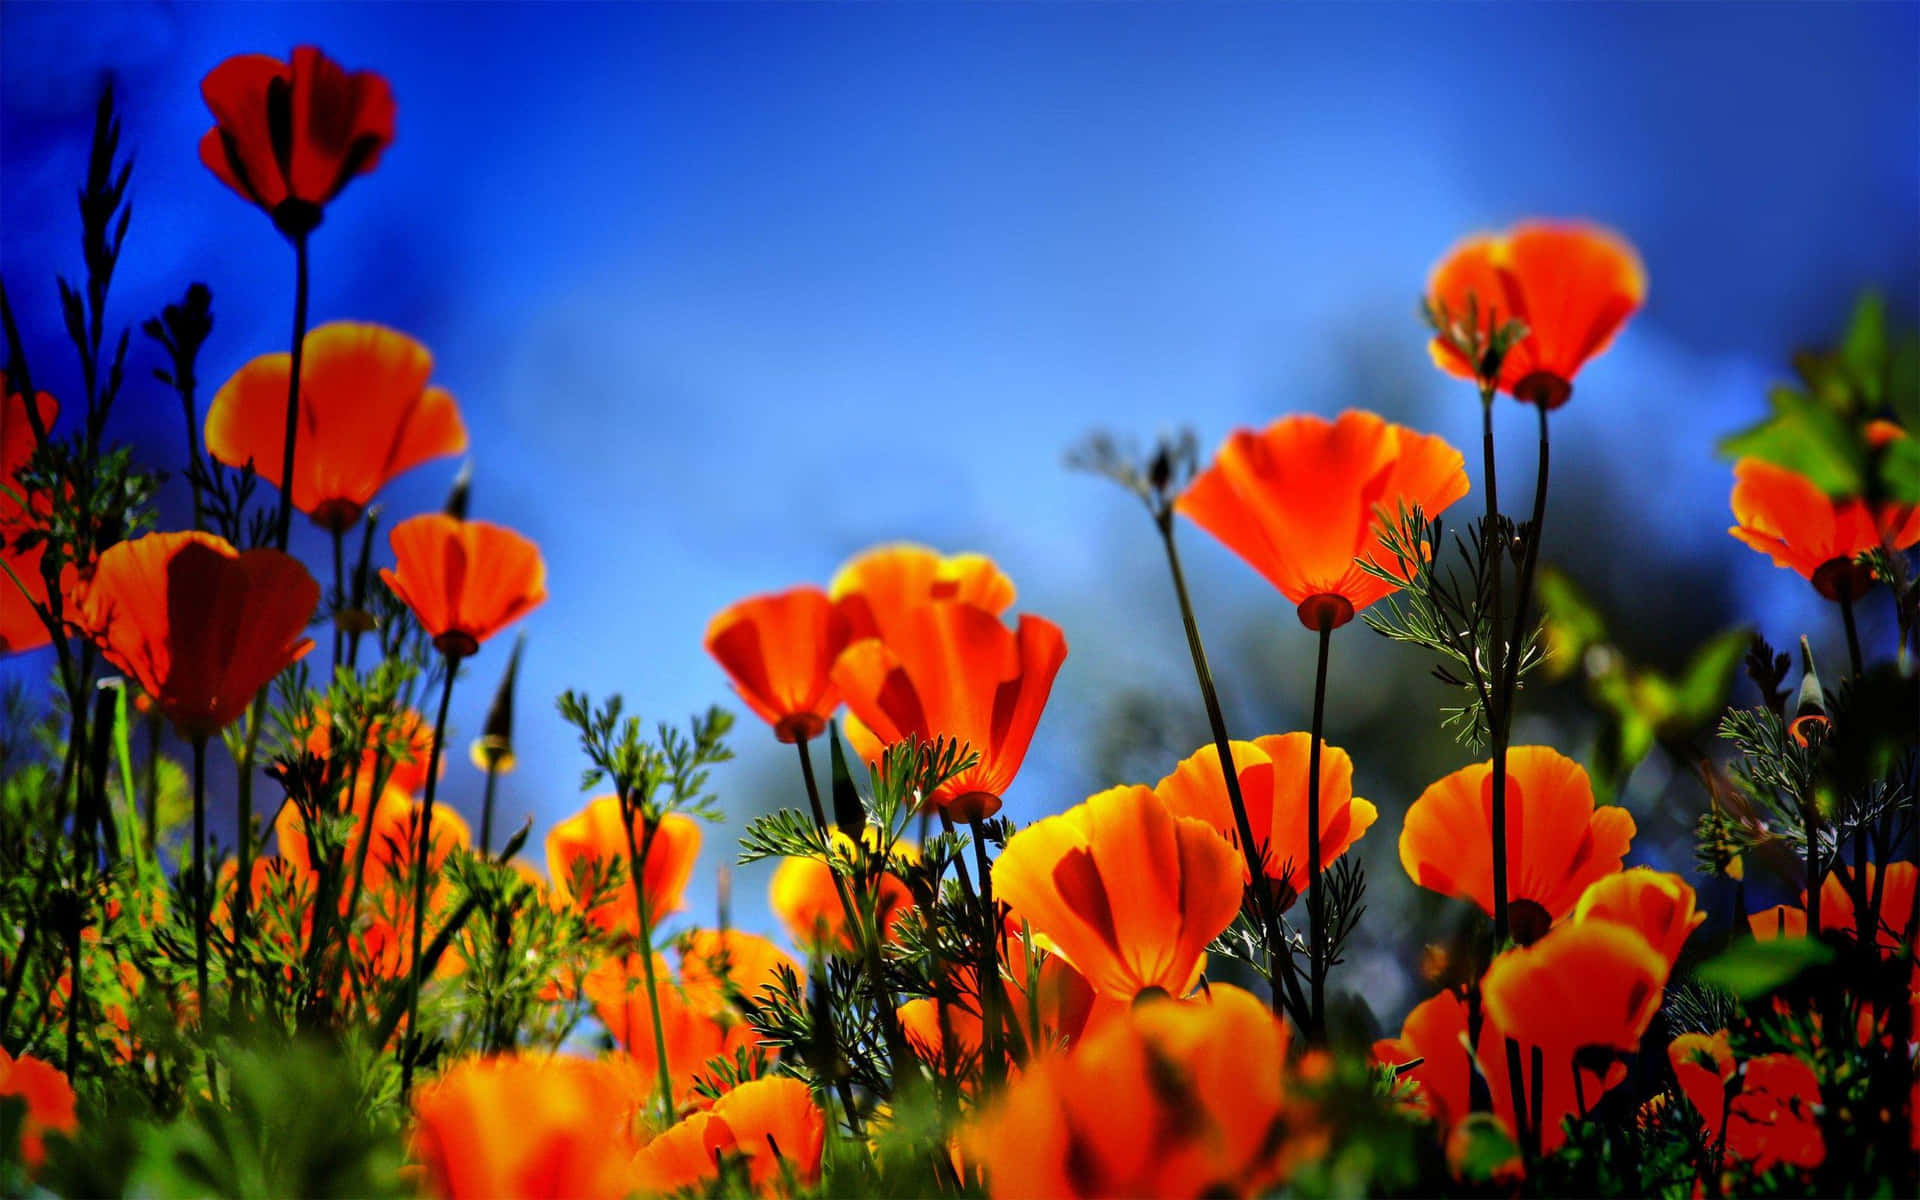 orange flowers in the field against a blue sky